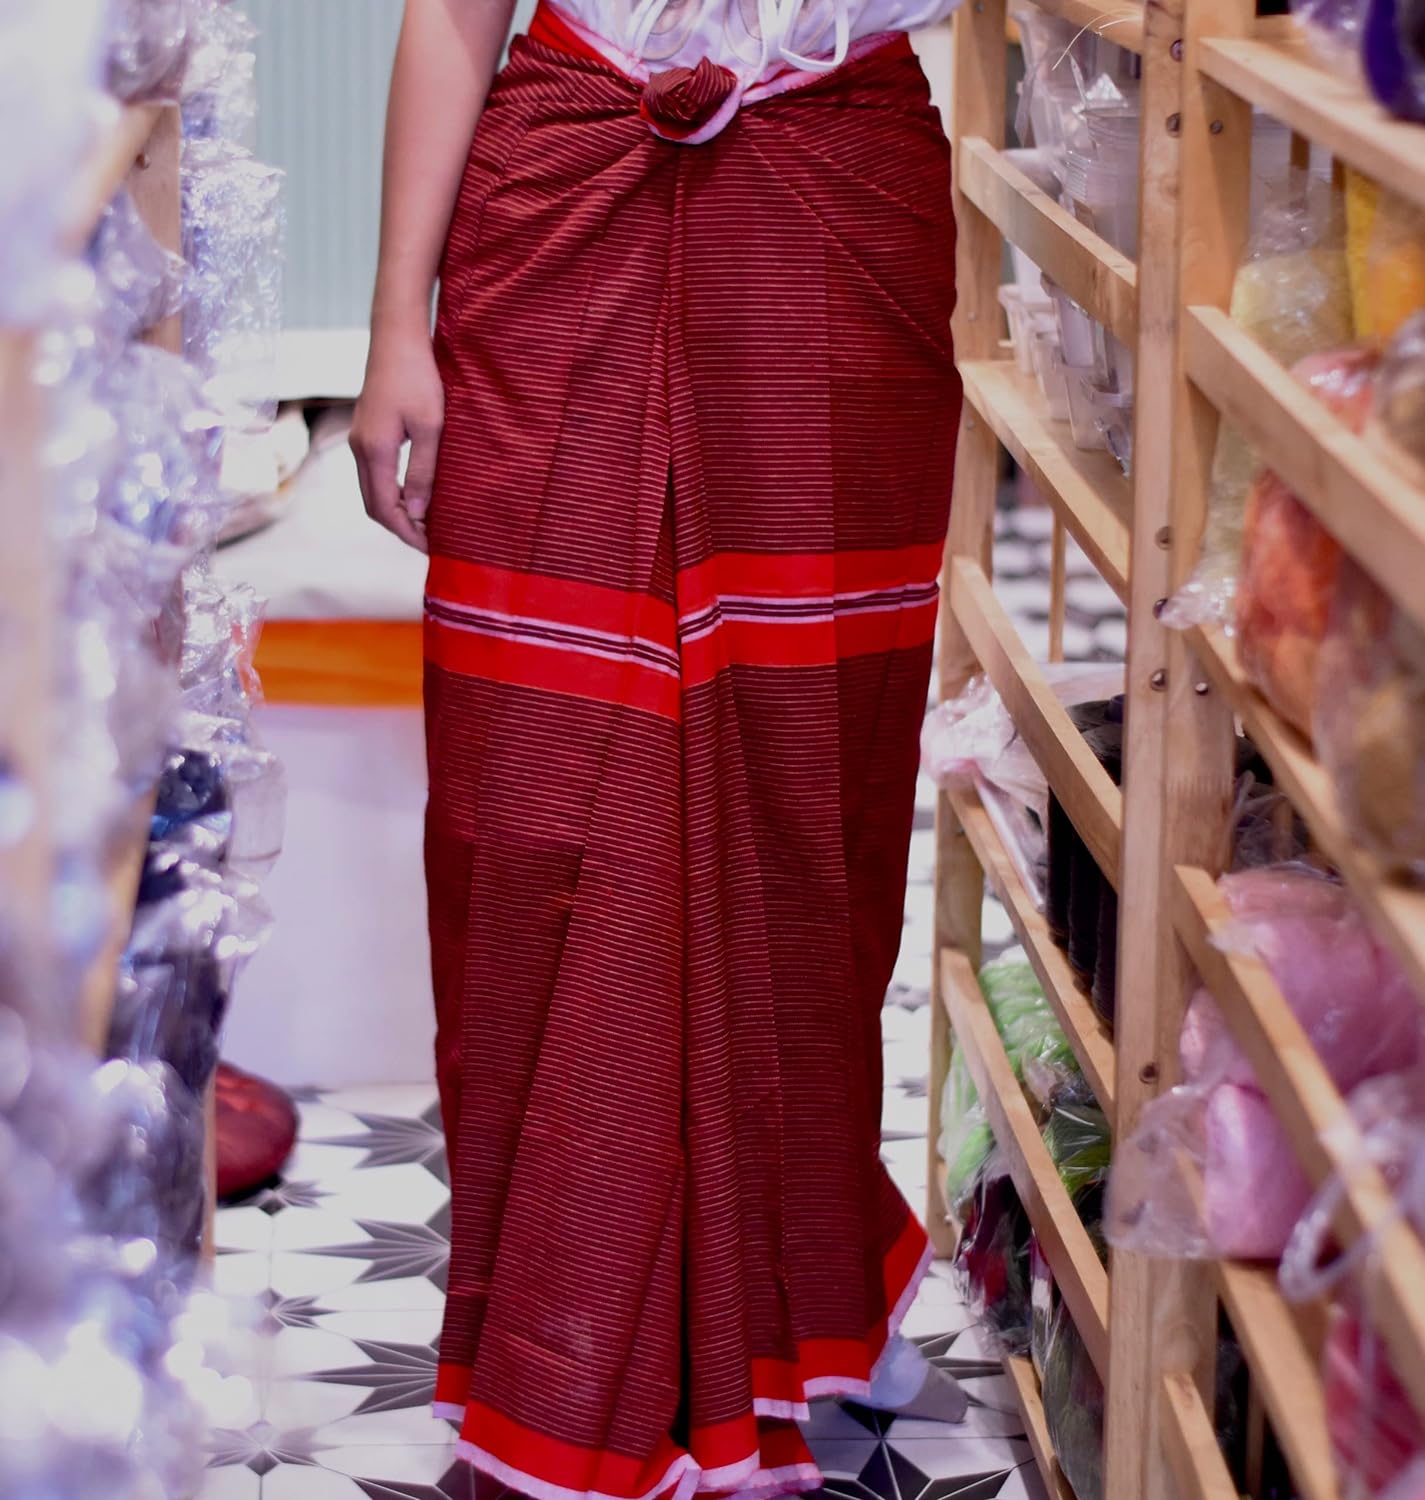 Women's Burmese Pants Longyi Myanmar Sarong Pareo Traditional Dress Handmad Burma Woven (Red)